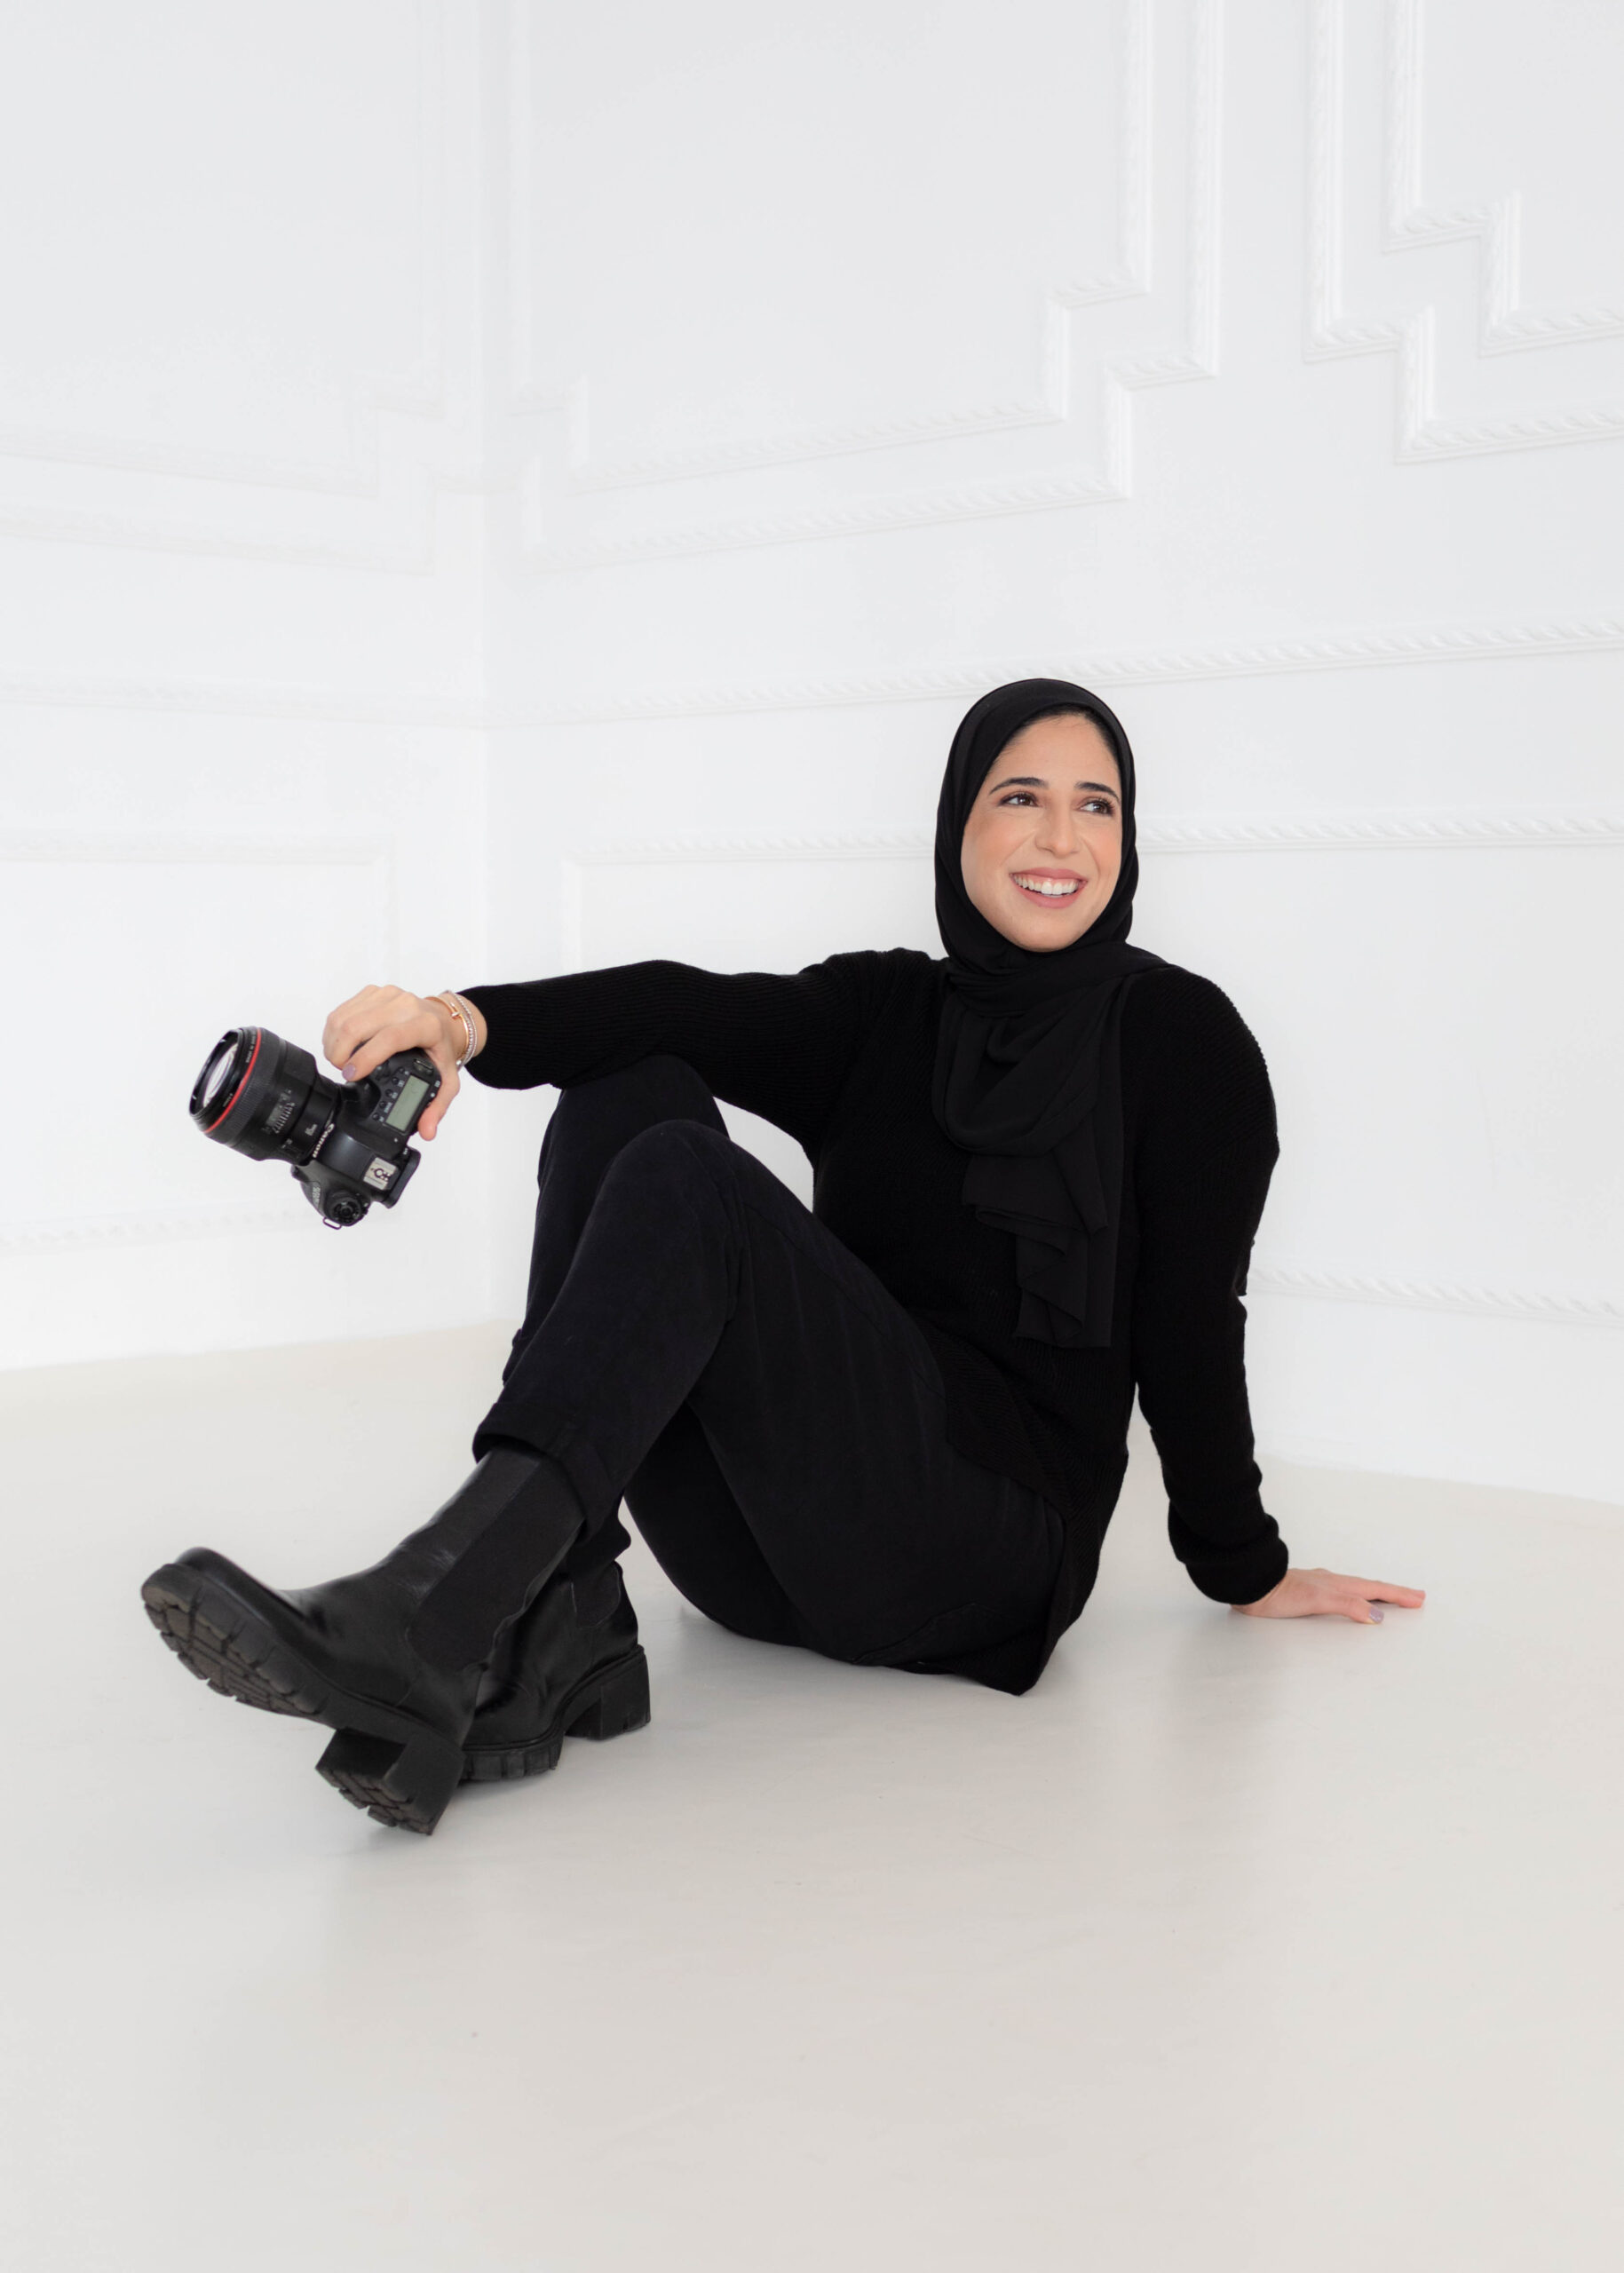 Entrepreneure, artiste photographe, Soukaina Benchekroun se dévoile